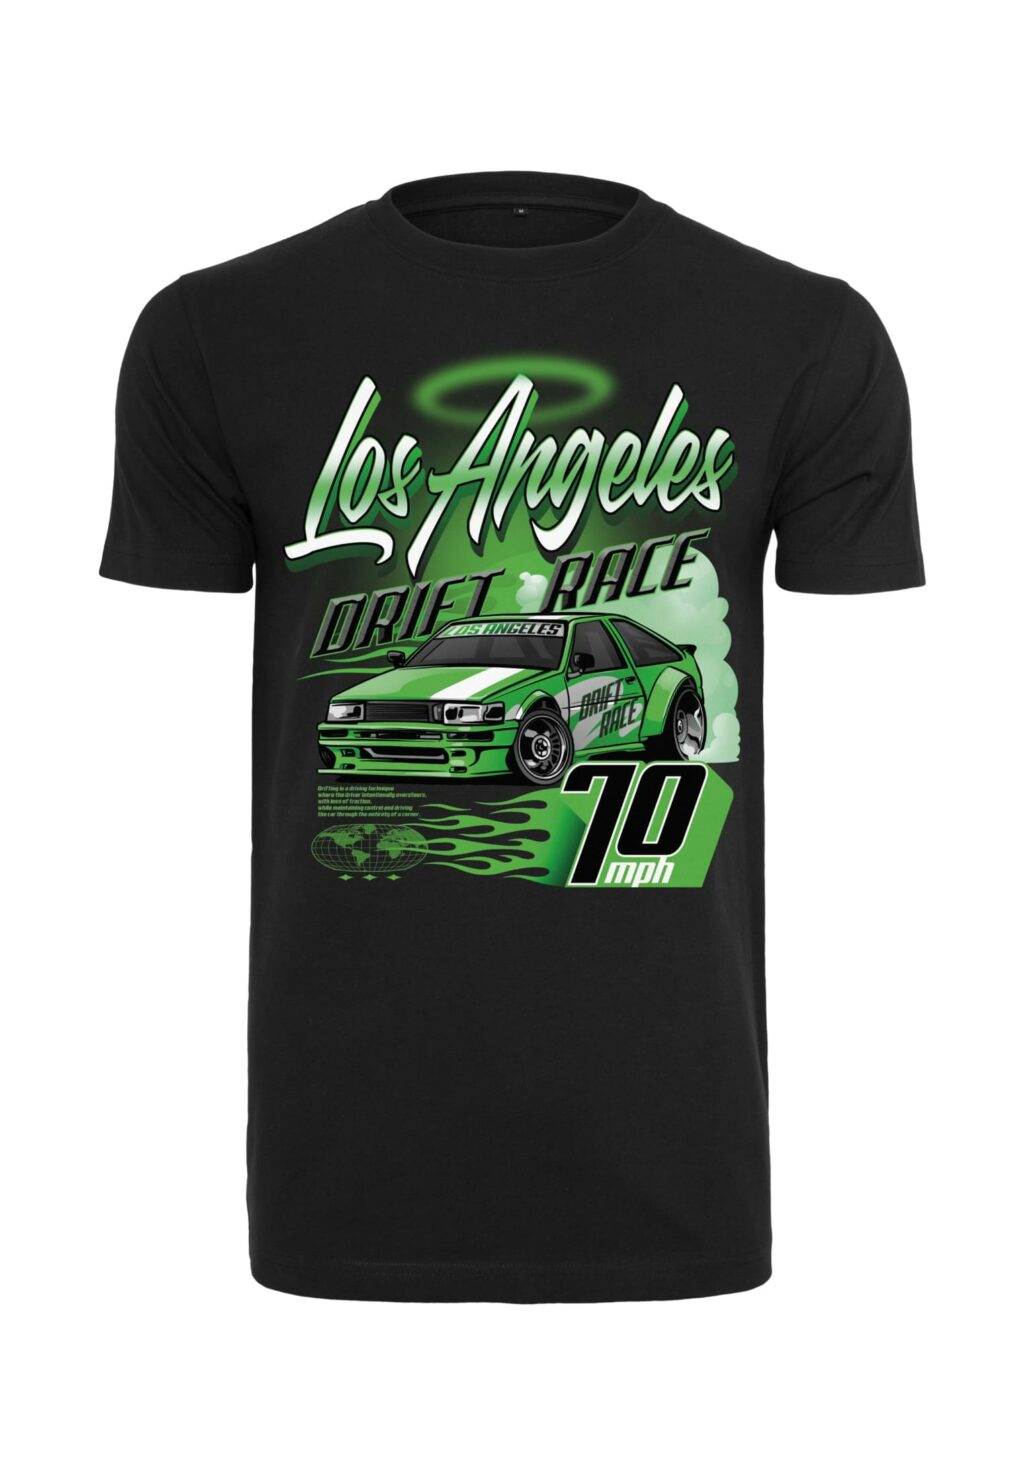 Los Angeles Drift Race Tee black MT2813